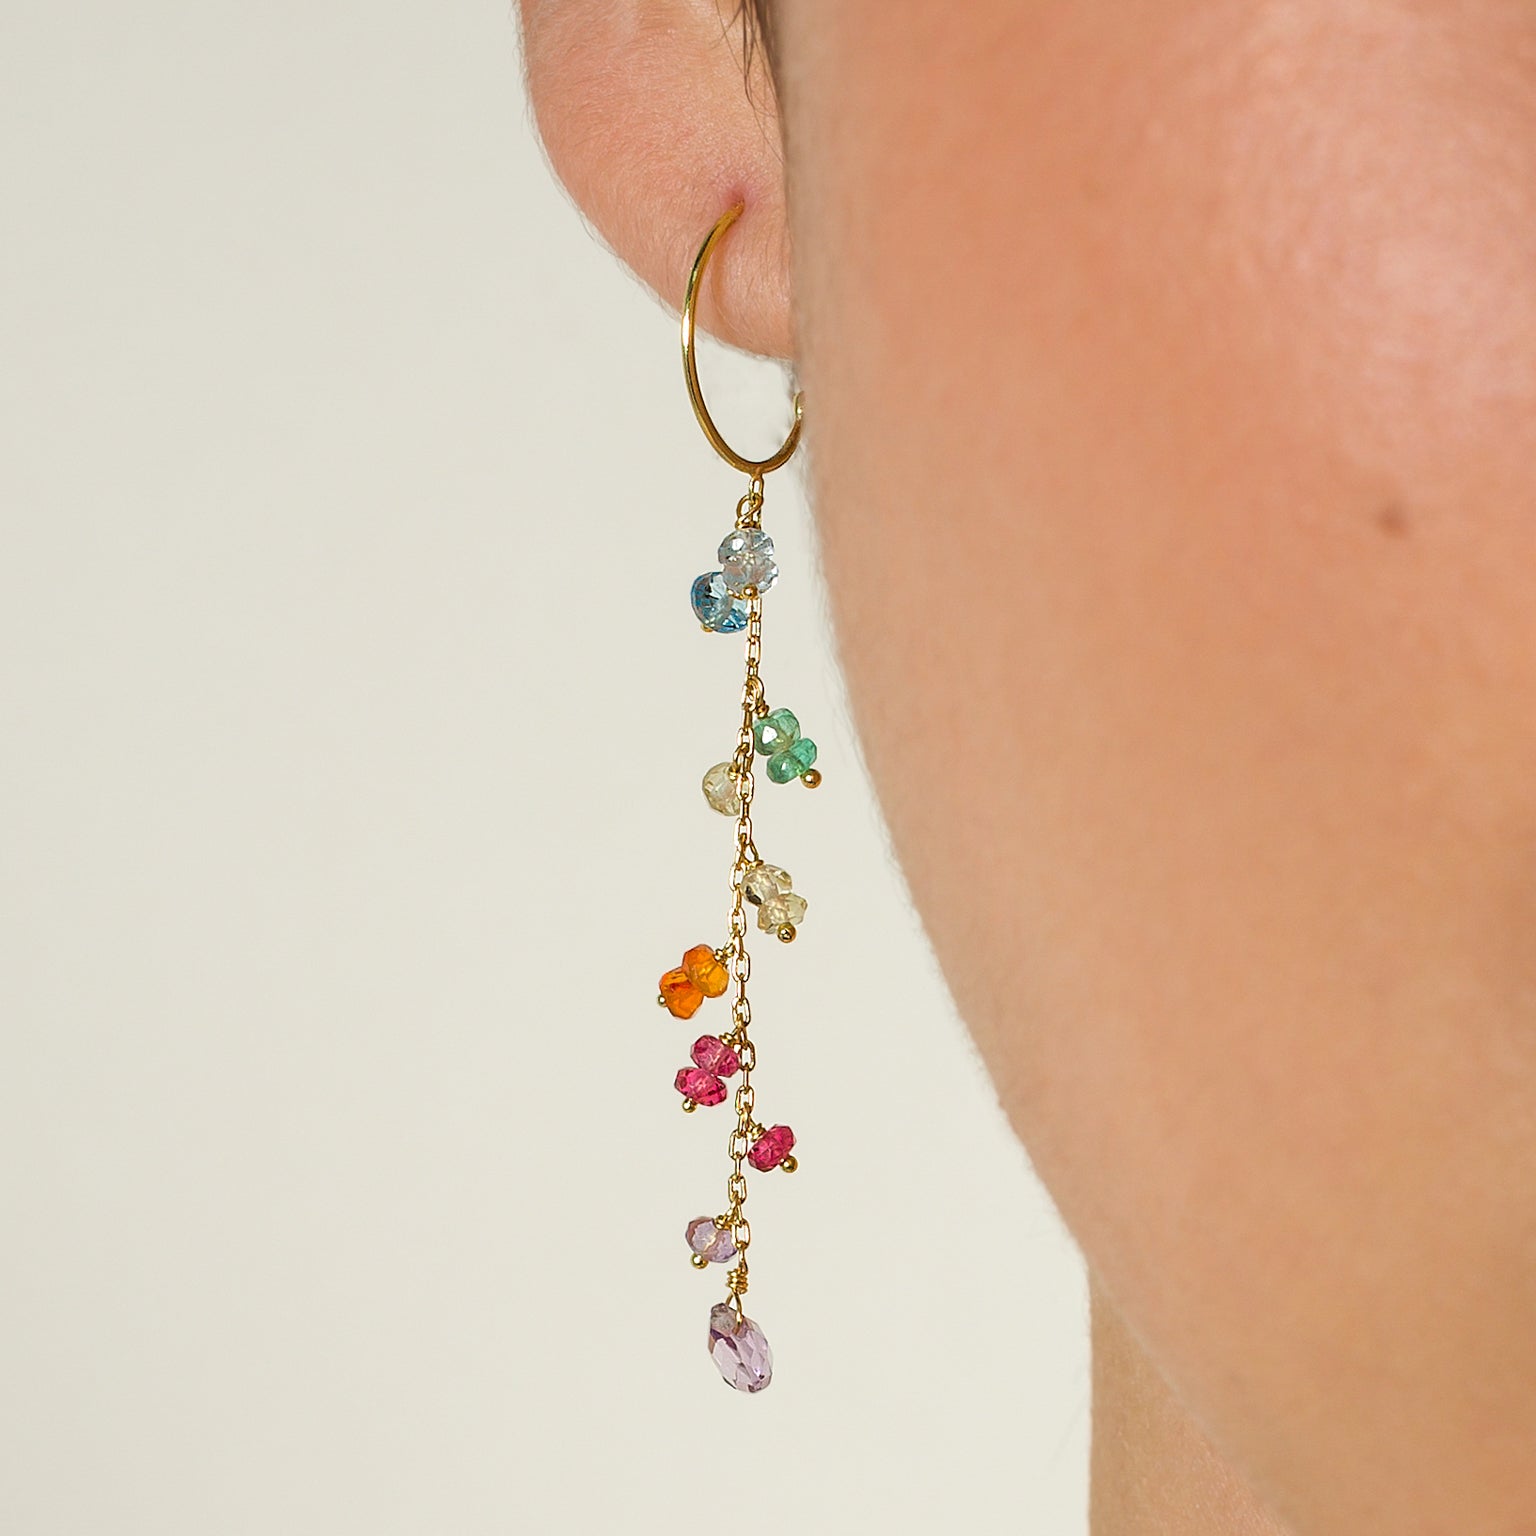 Real 14K Yellow Gold Eye Oval Marquise Chain Earrings Ladies Dangle Hanging  | eBay